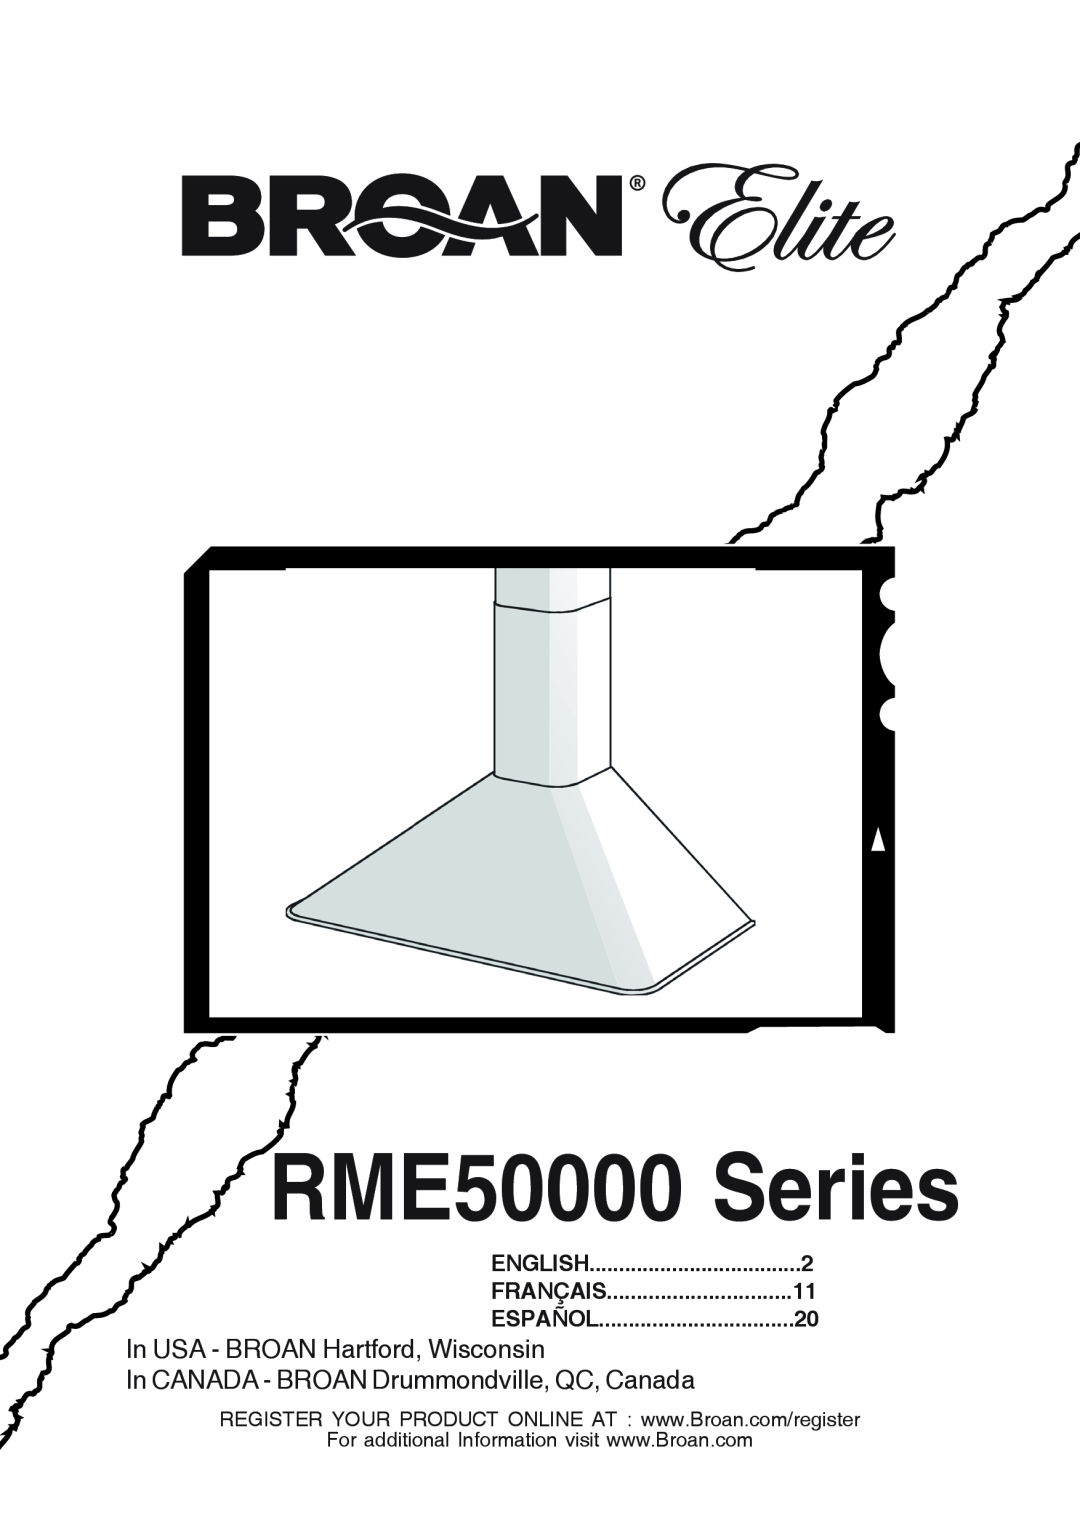 Broan RME50000 manual In USA - BROAN Hartford, Wisconsin, In CANADA - BROAN Drummondville, QC, Canada, English, Français 